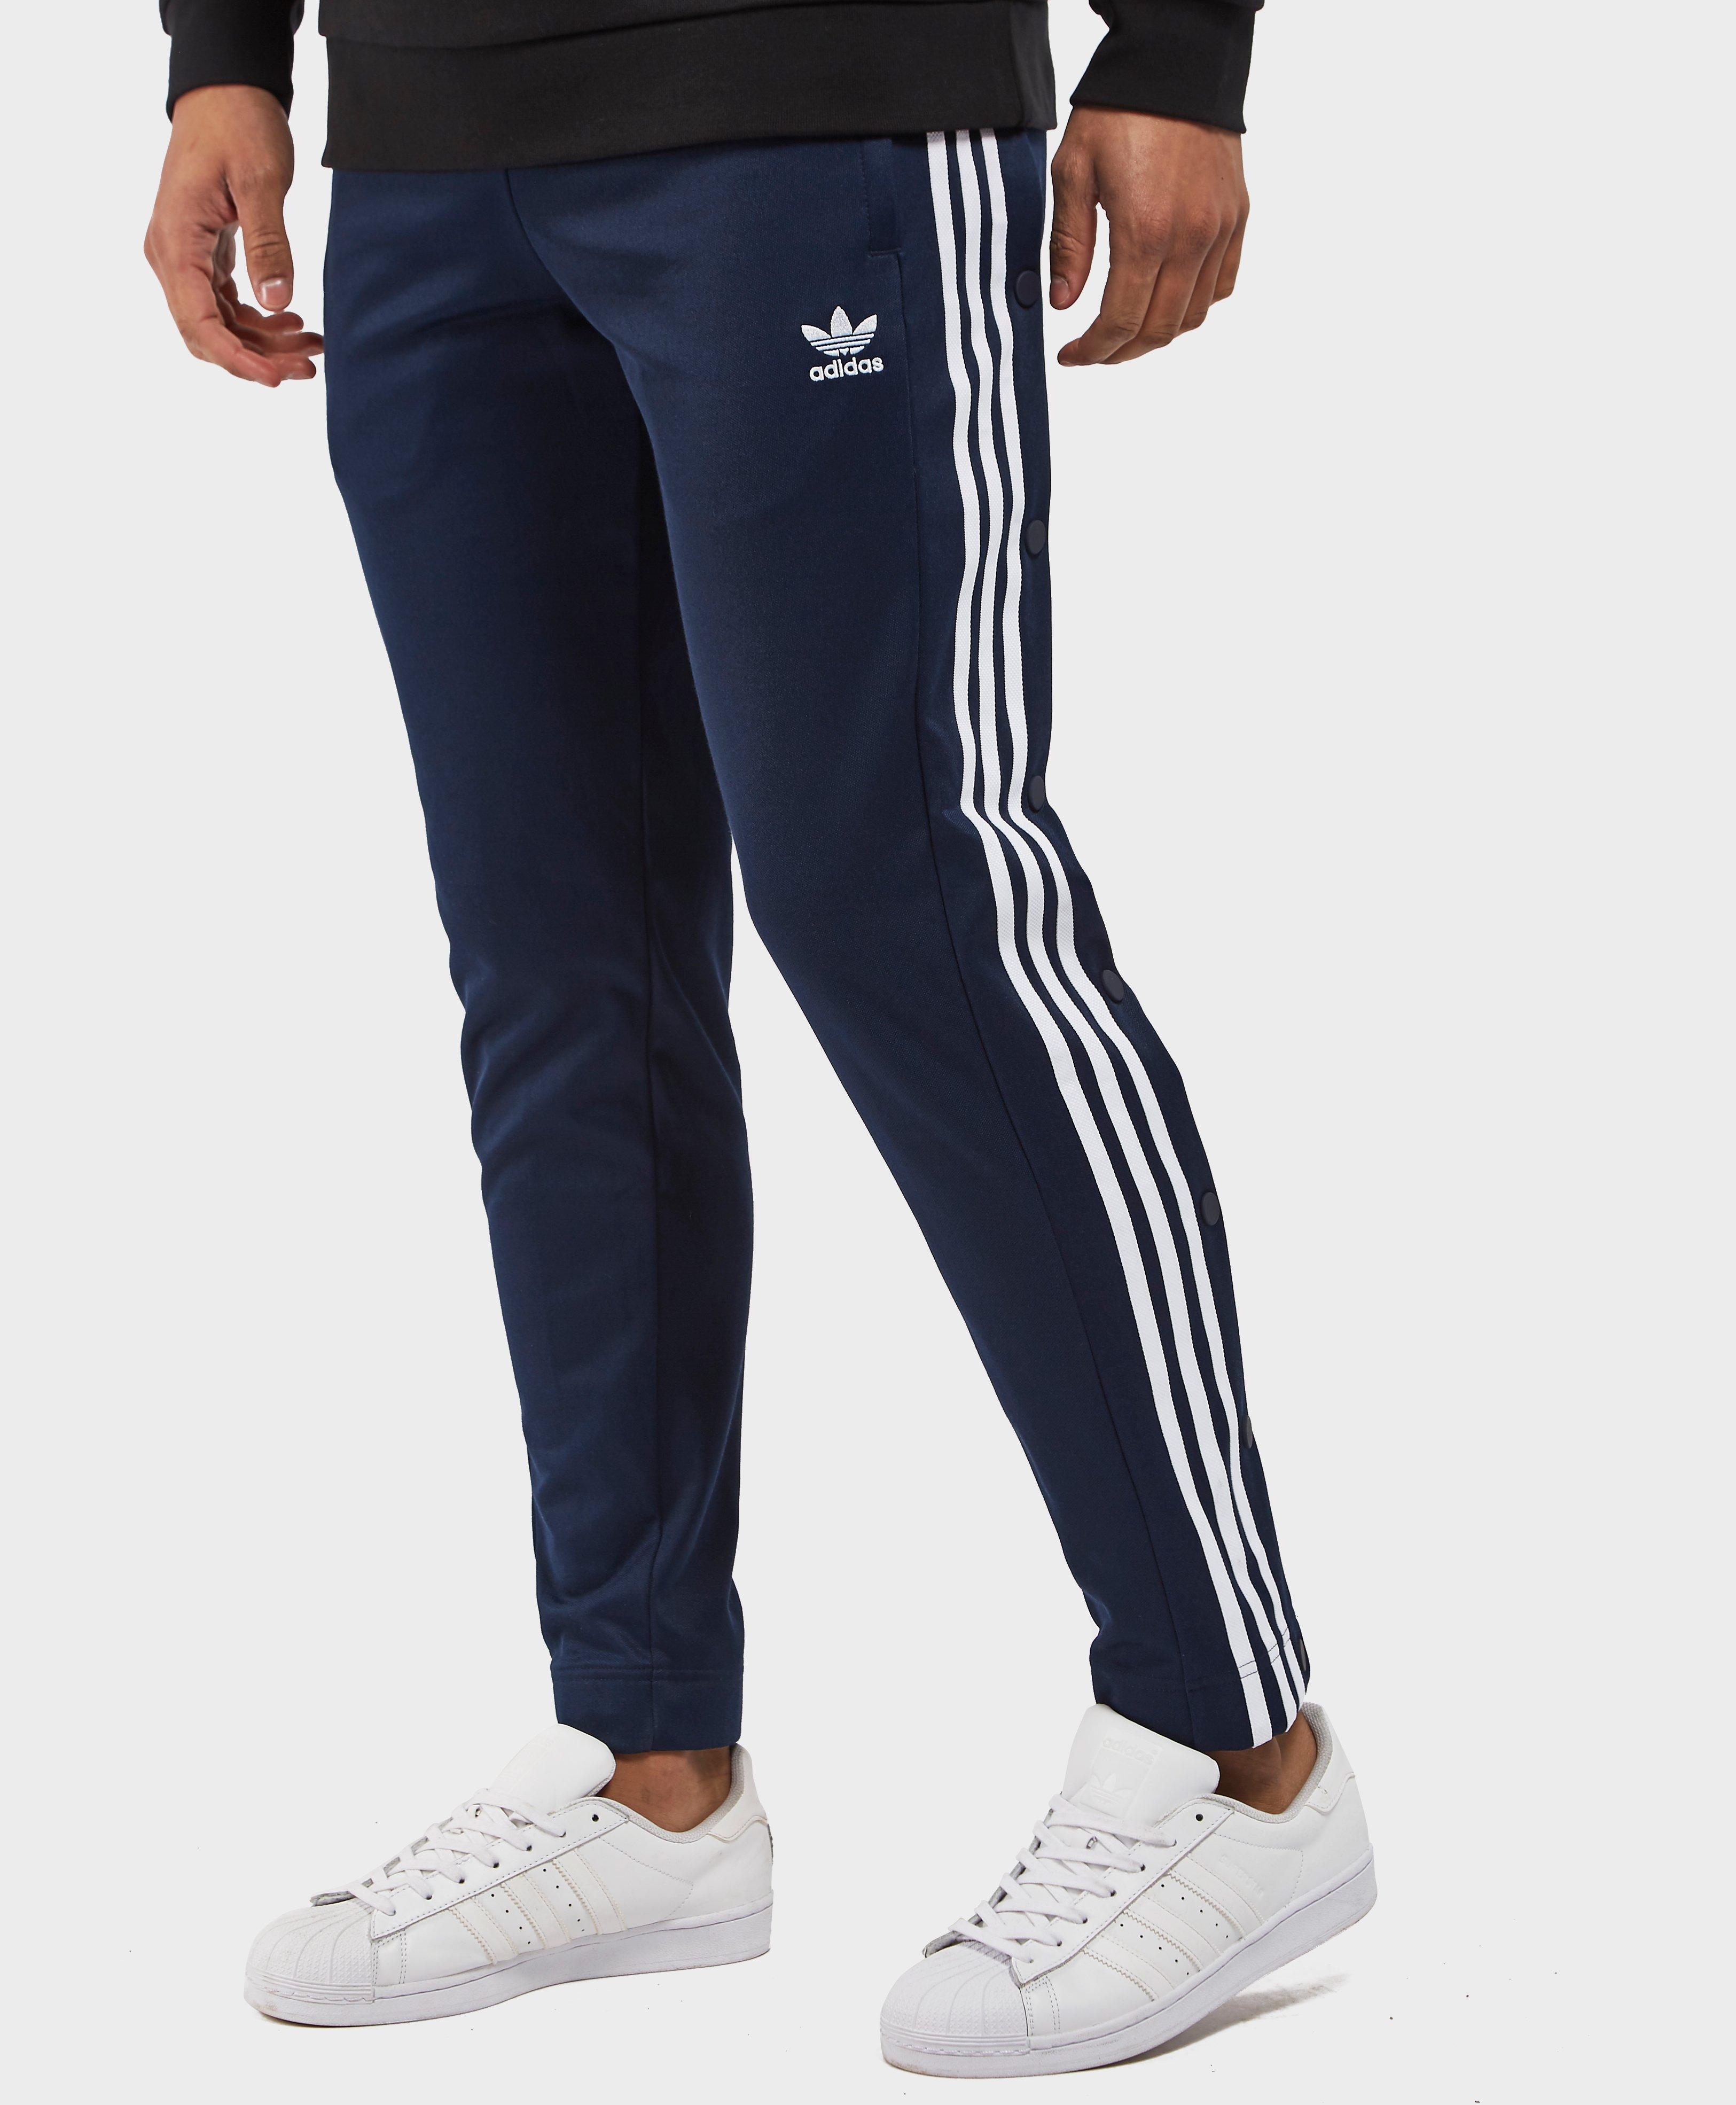 Lyst - Adidas Originals Adibreak Snap Track Pants in Blue for Men ...